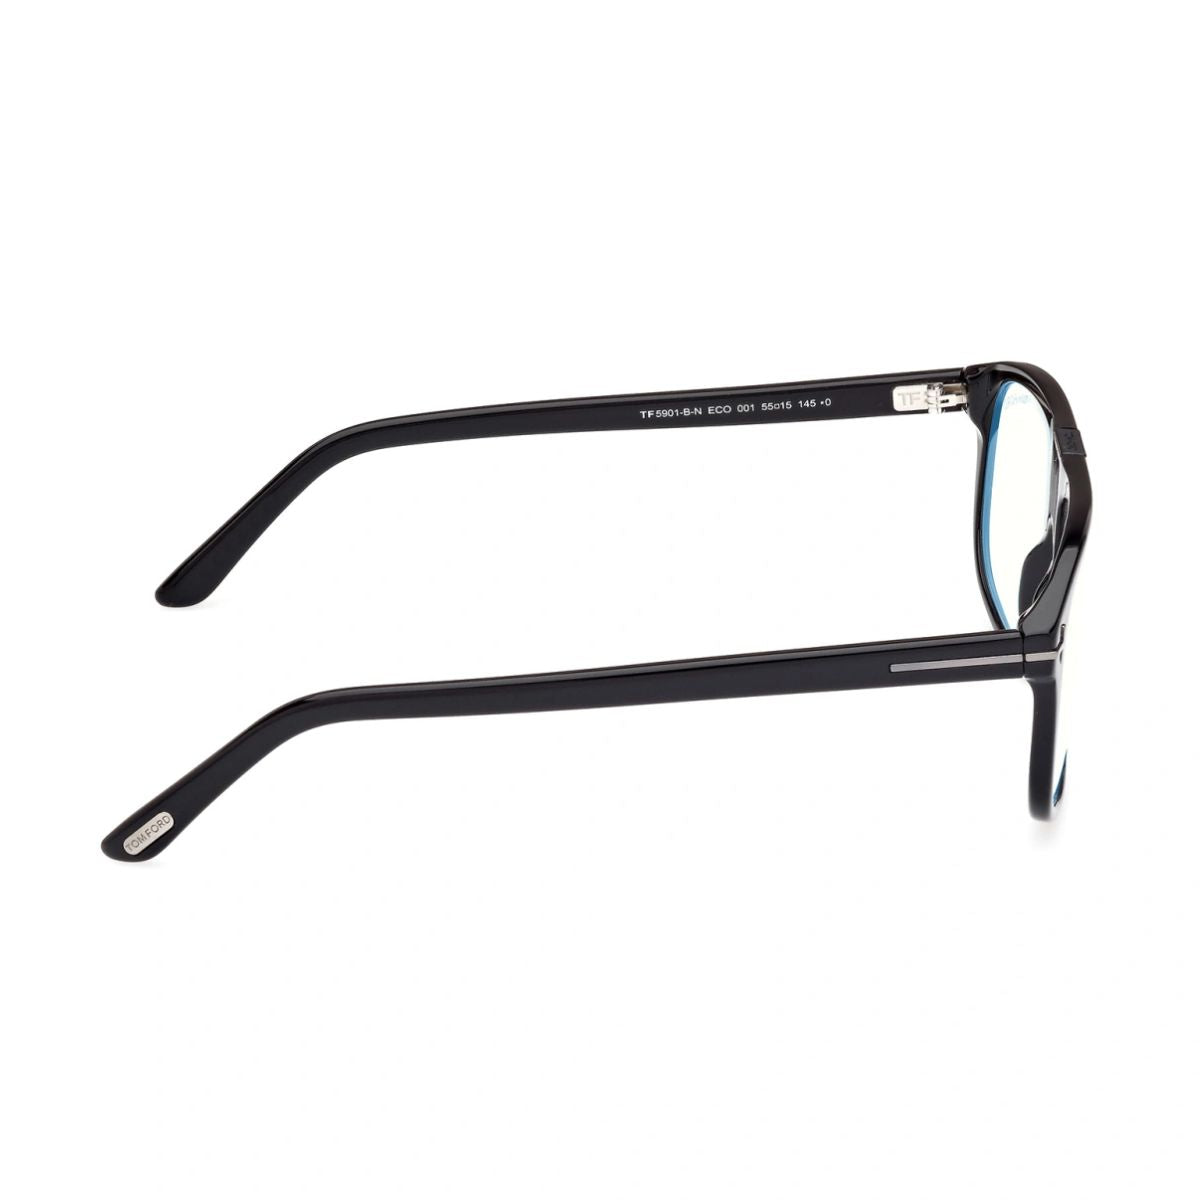 "Buy Latest Tom Ford TF5901BN 001 Eyewear Glasses For Men's At Optorium"